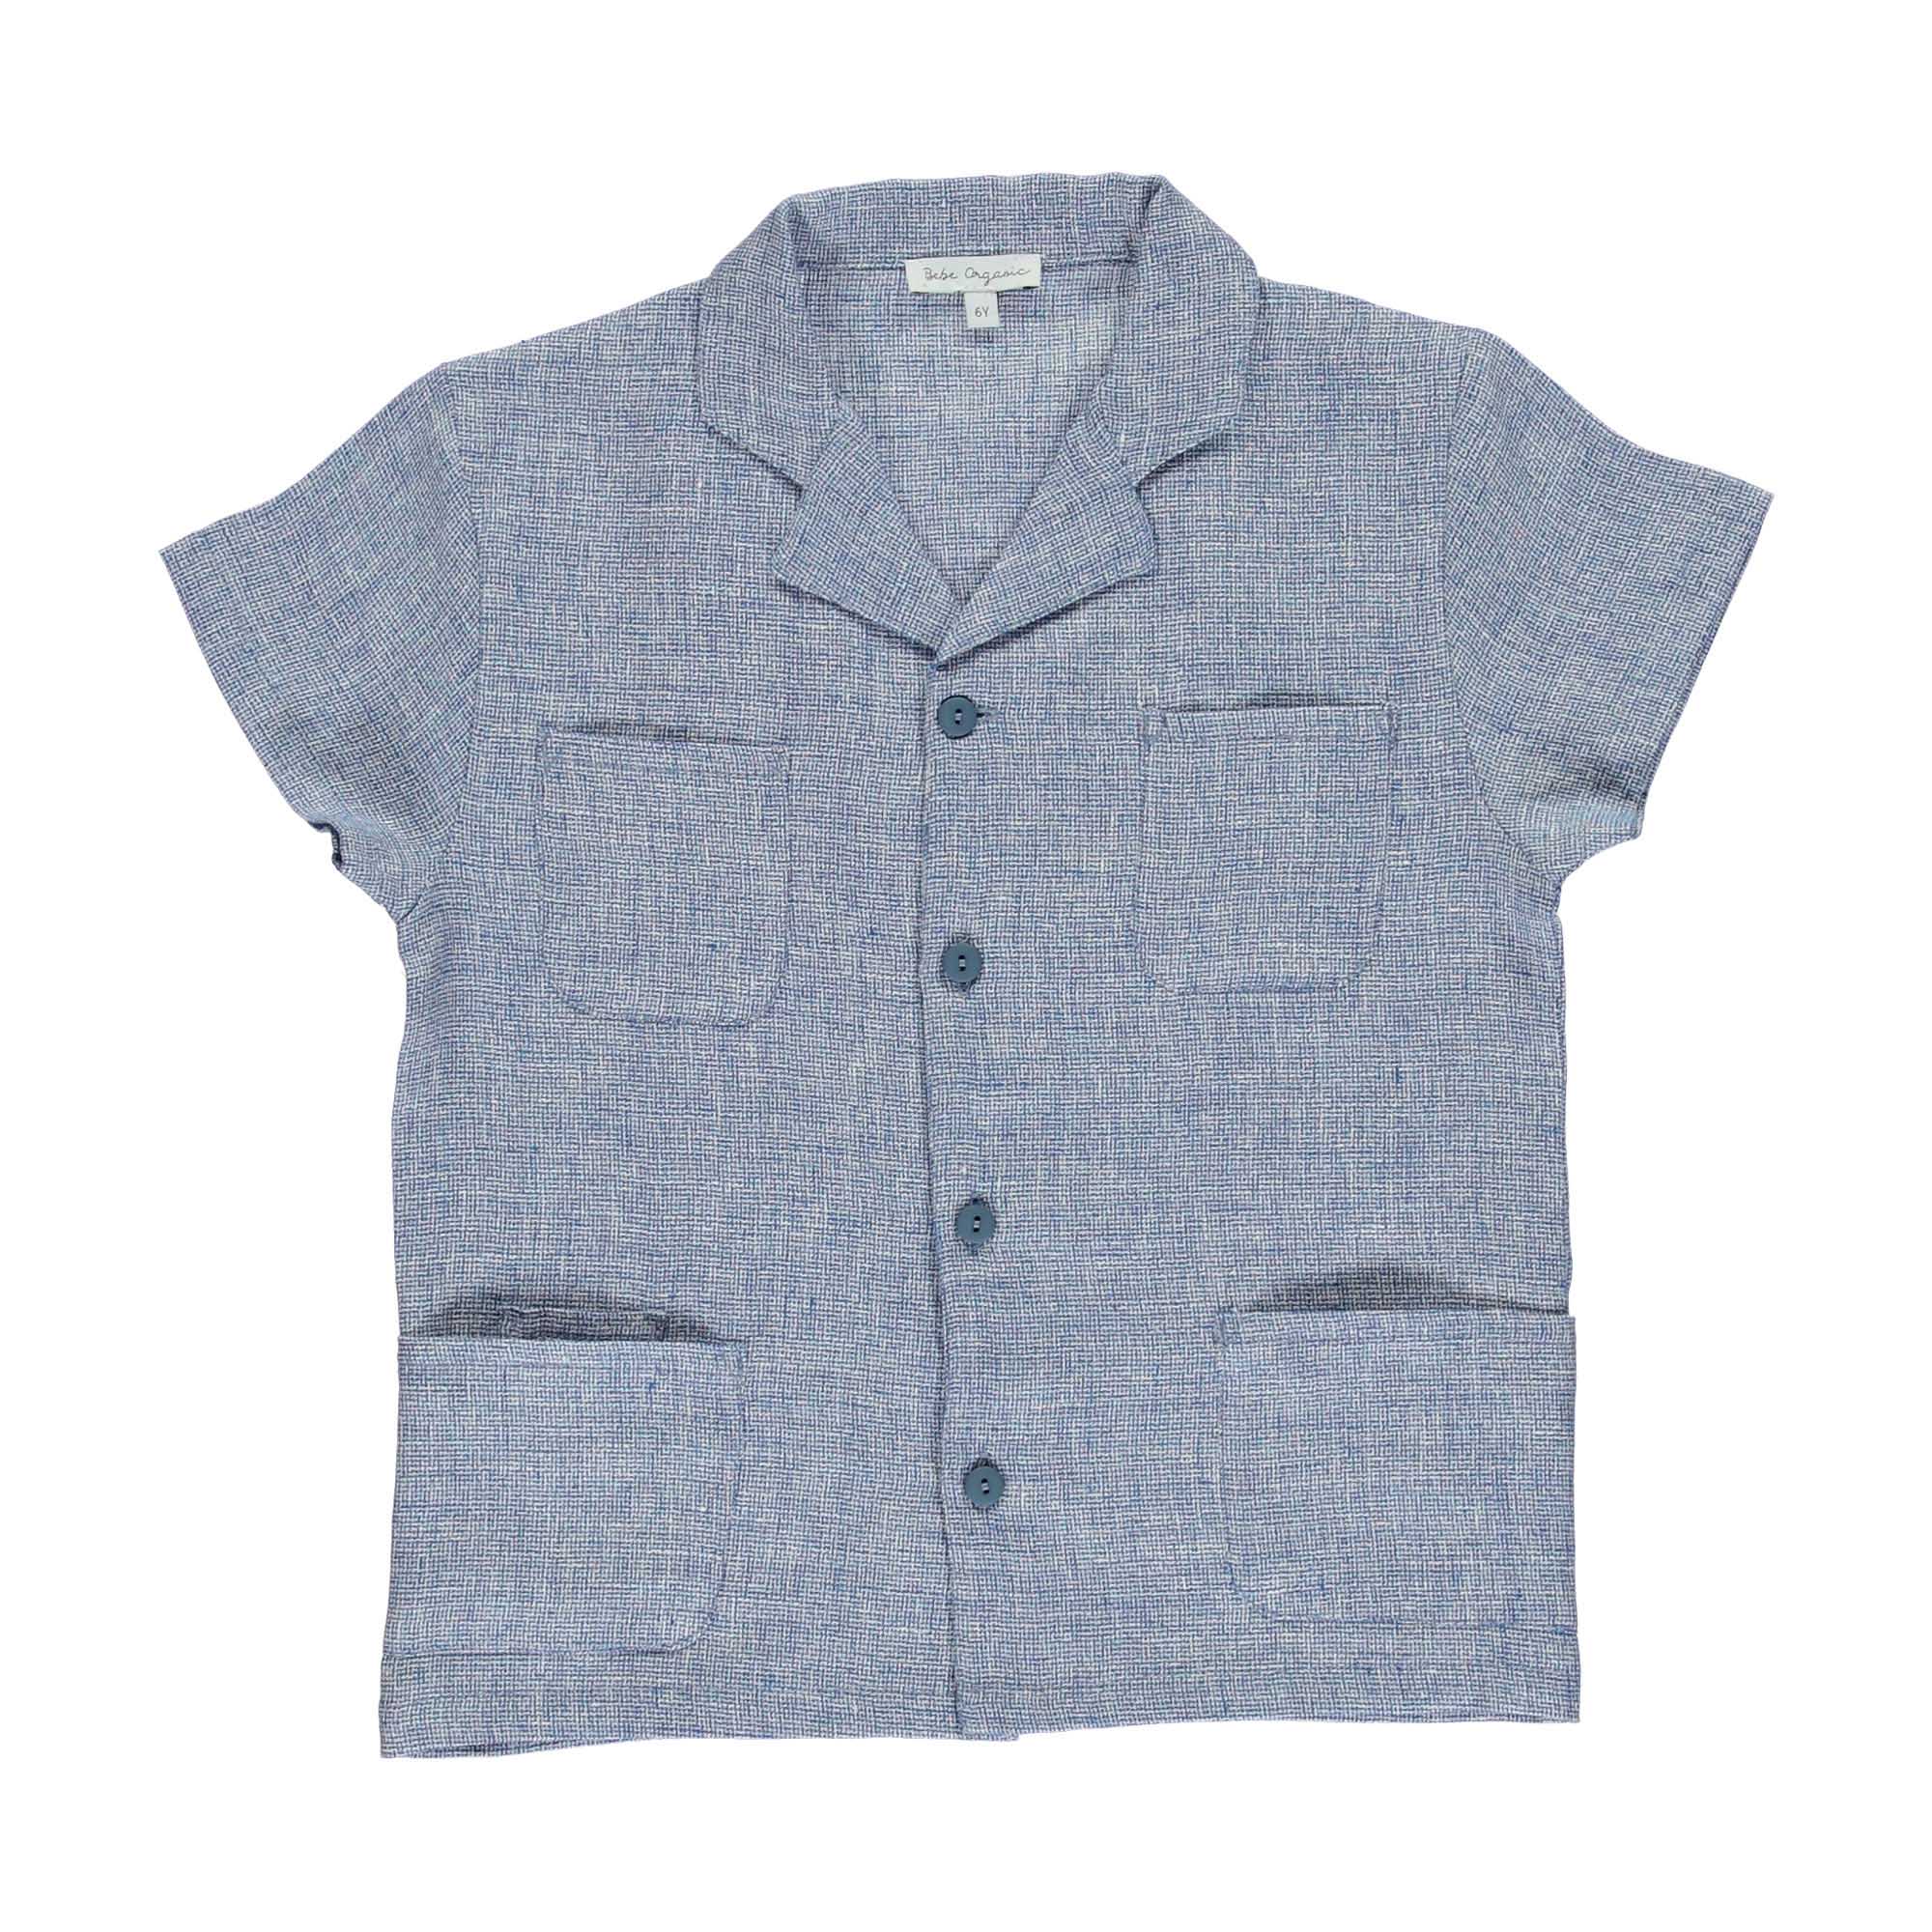 Jack 5 Pocket Shirt - Sea Blue